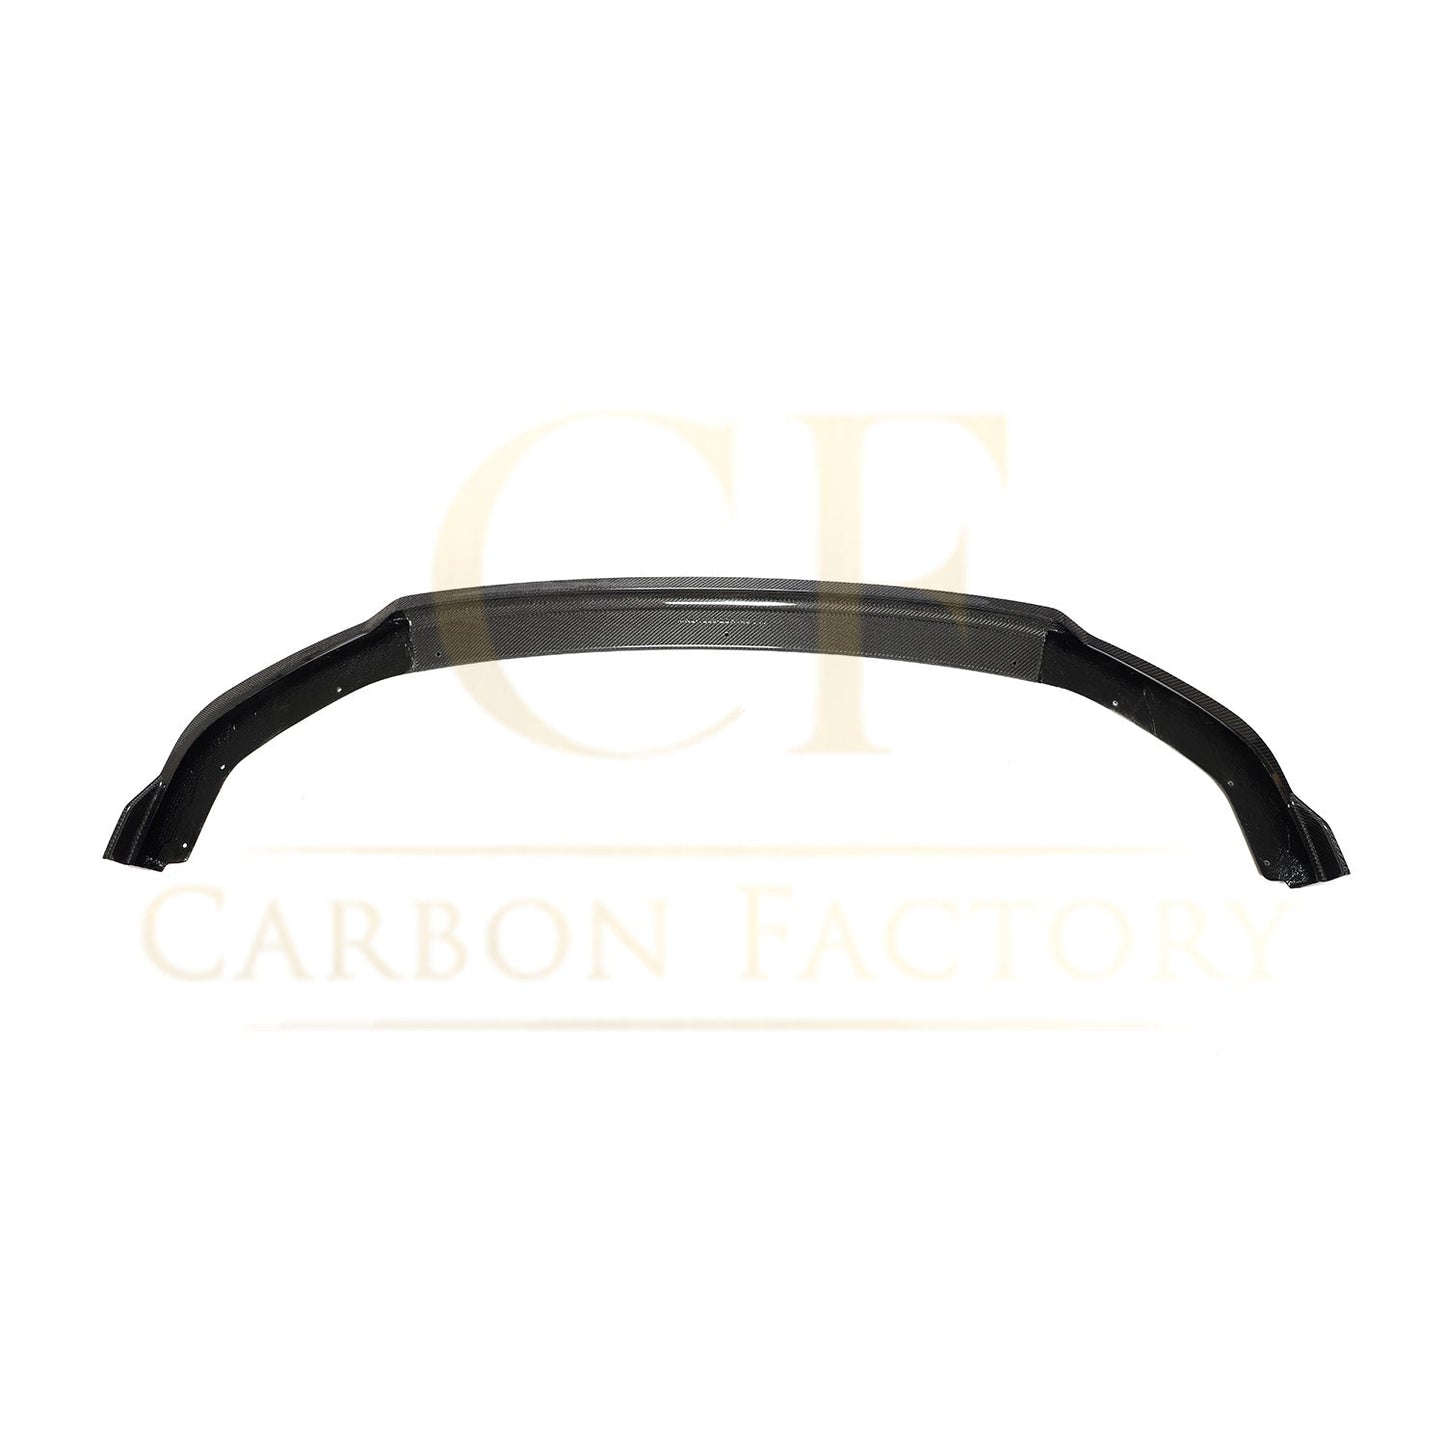 VW Polo MK6 GTI V Style Carbon Fibre Front Splitter 17-20-Carbon Factory